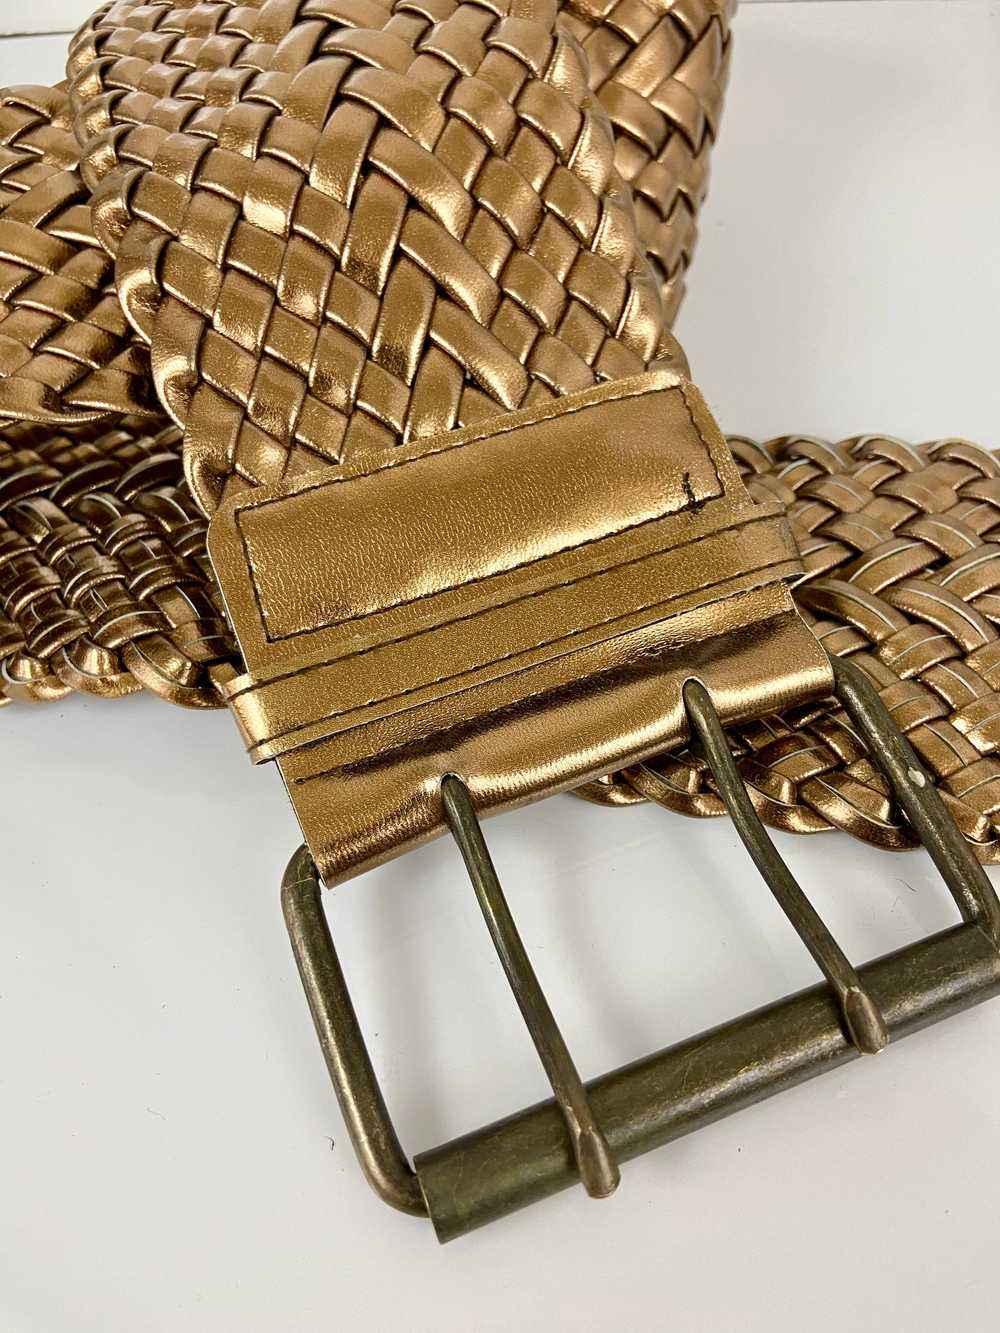 80's Vintage Woven Metallic Gold Braided
Belt - image 7